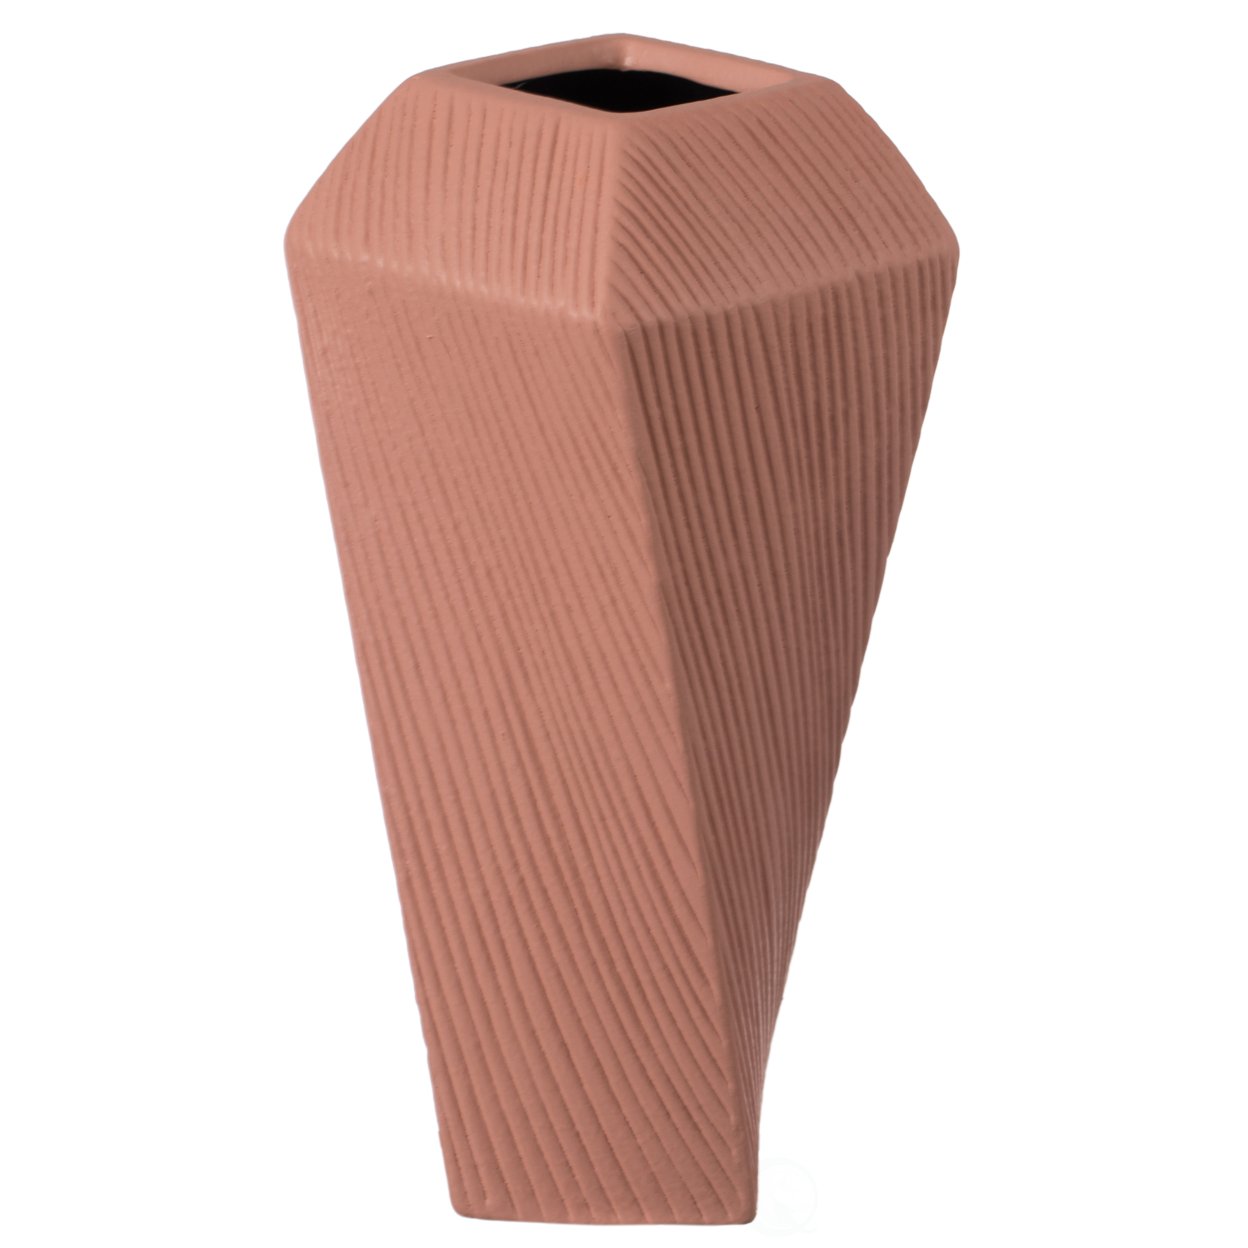 Decorative Ceramic Square Twisted Centerpiece Table Vase - Pink